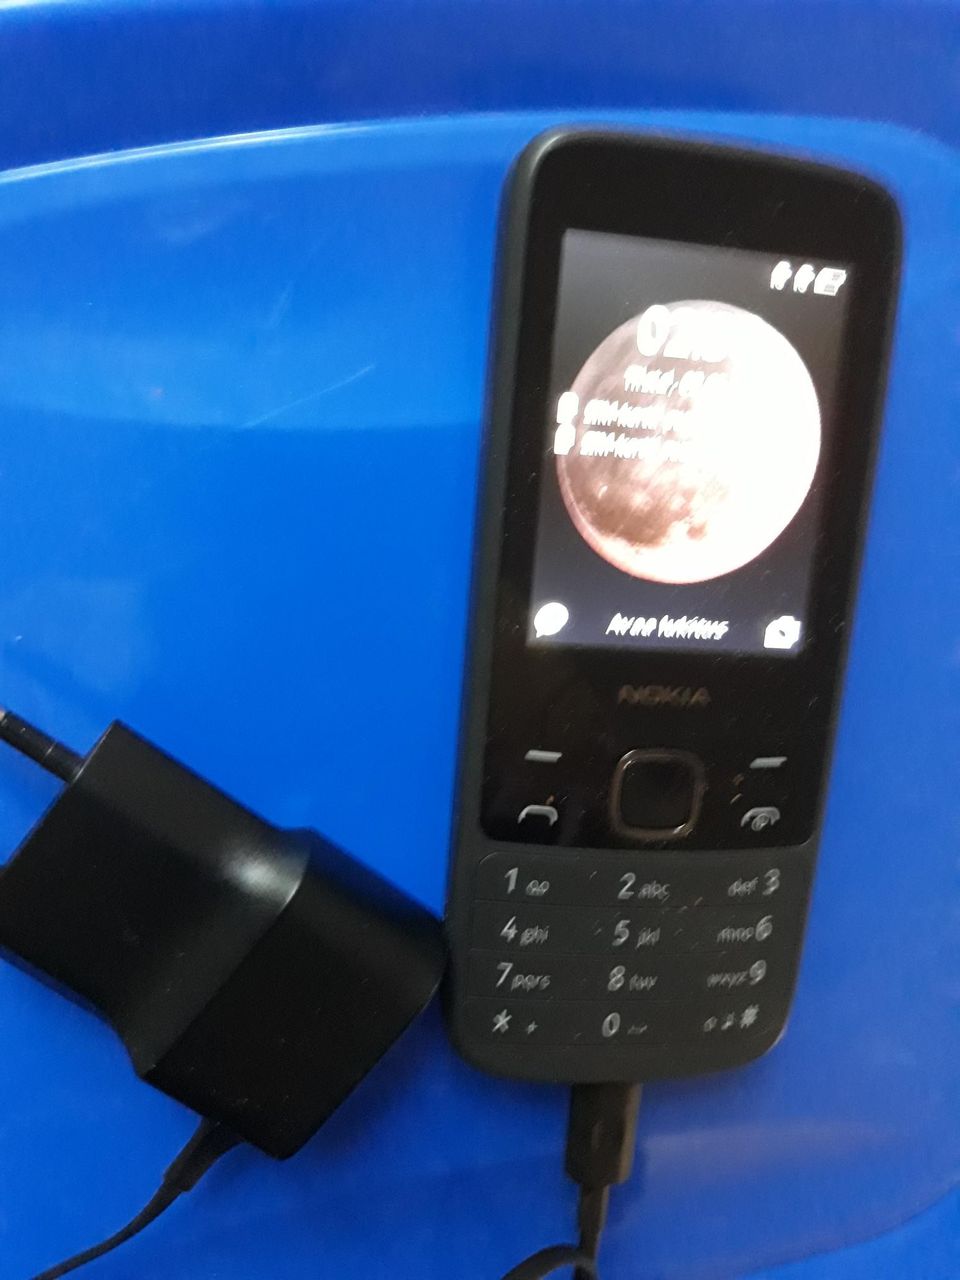 Nokia peruspuhelin Lappeenranta